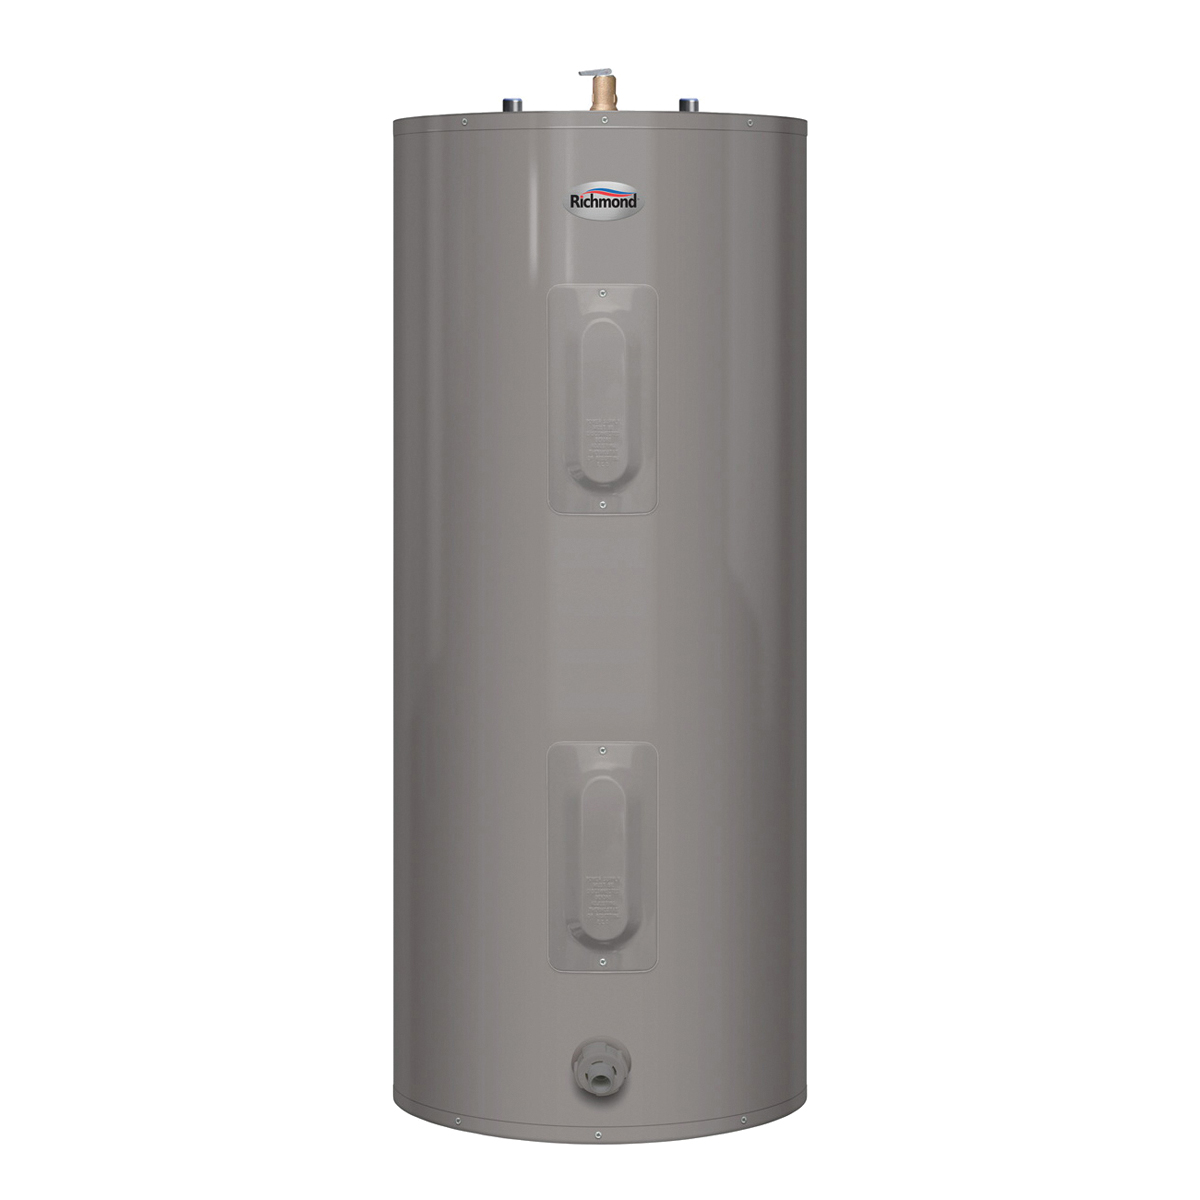 Essential Series 6EM30-D Electric Water Heater, 240 V, 4500 W, 30 gal Tank, 0.9 Energy Efficiency